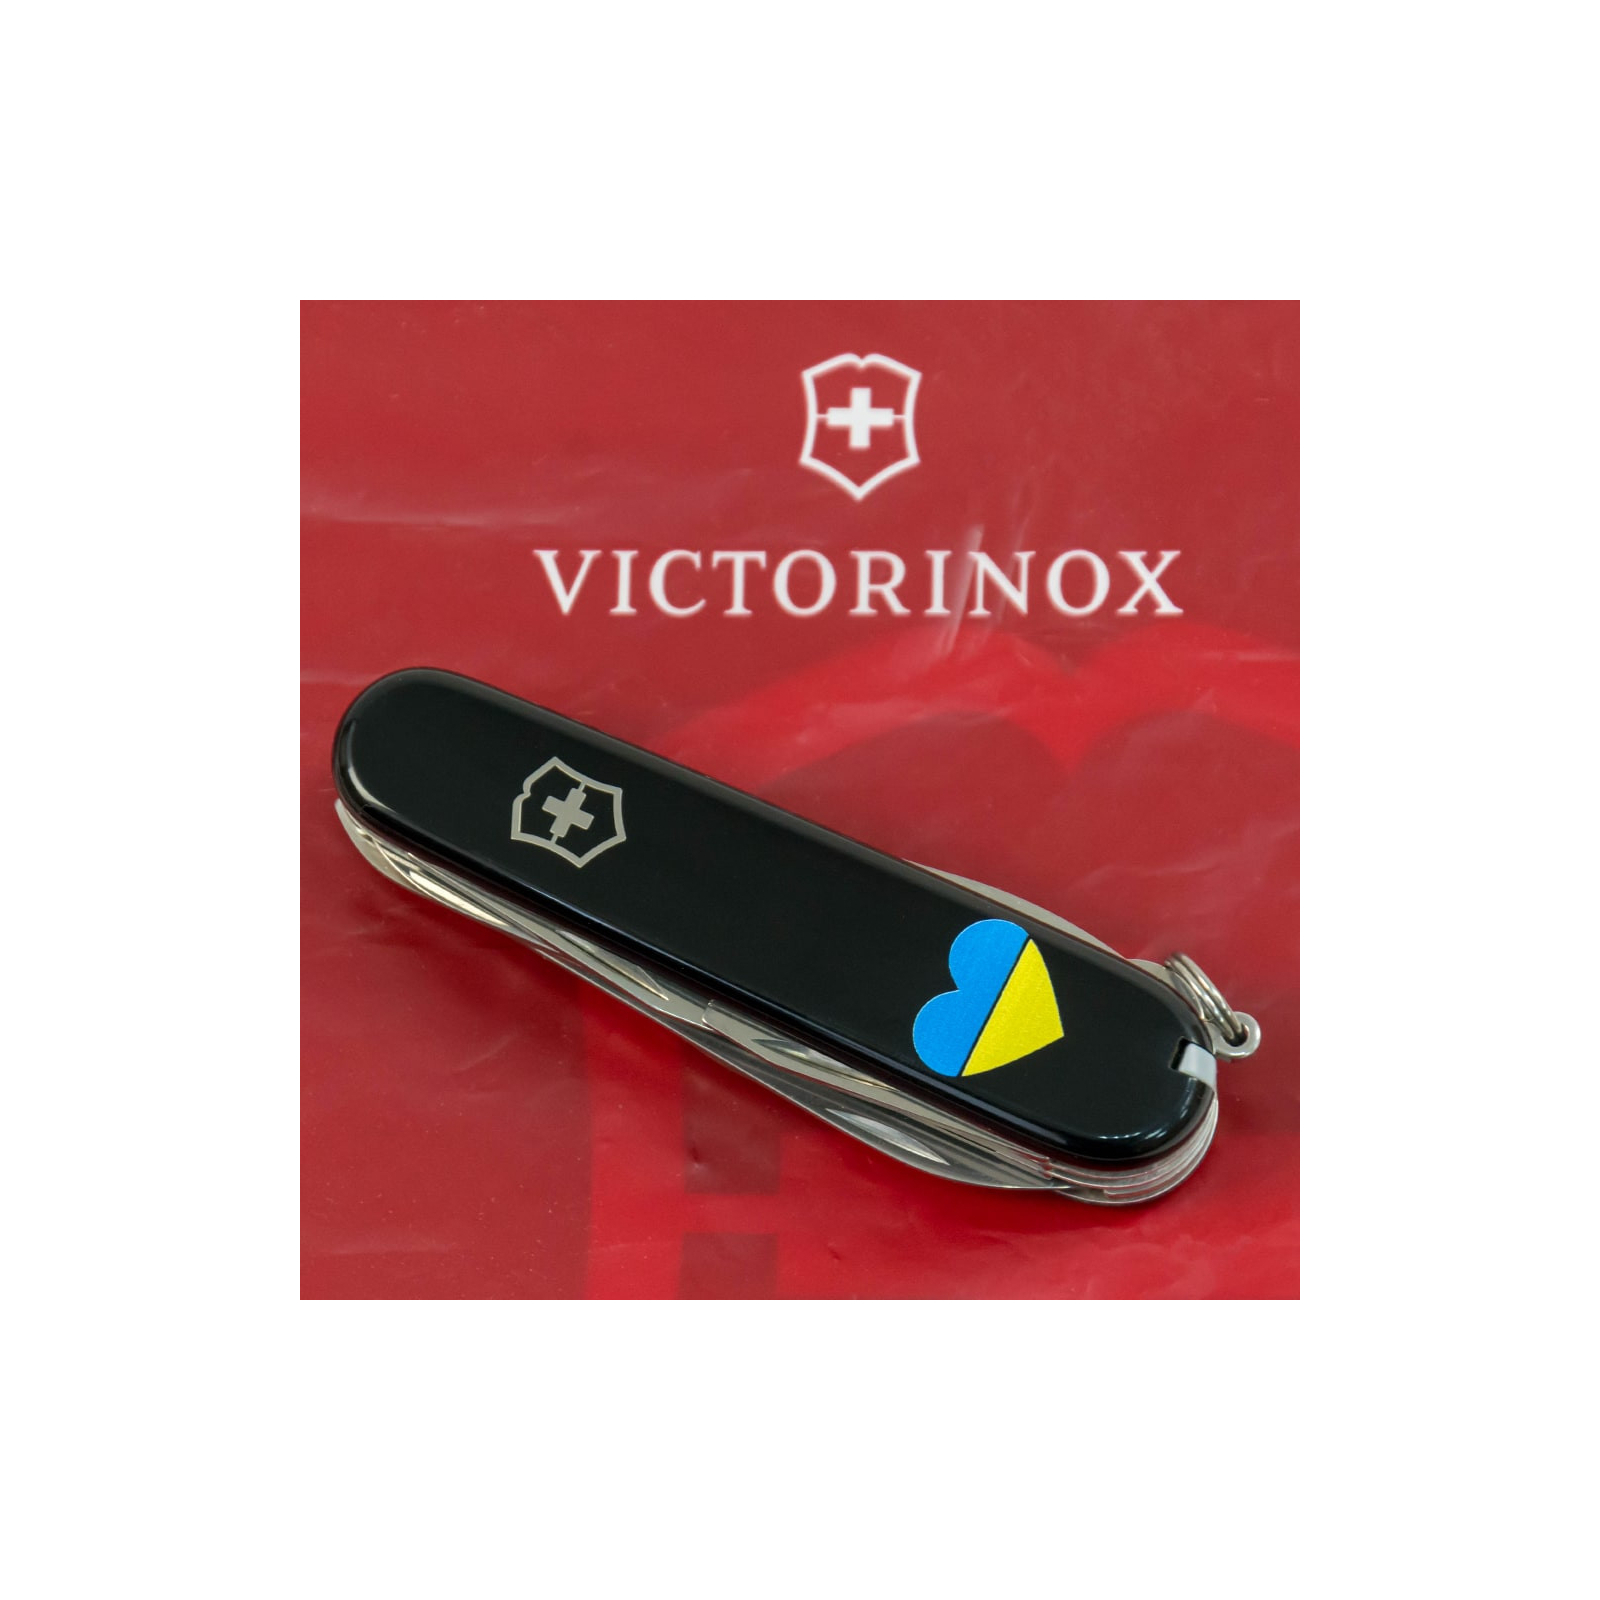 Нож Victorinox Huntsman Ukraine 91 мм Жовто-синій малюнок (1.3713.7_T3100p) изображение 2